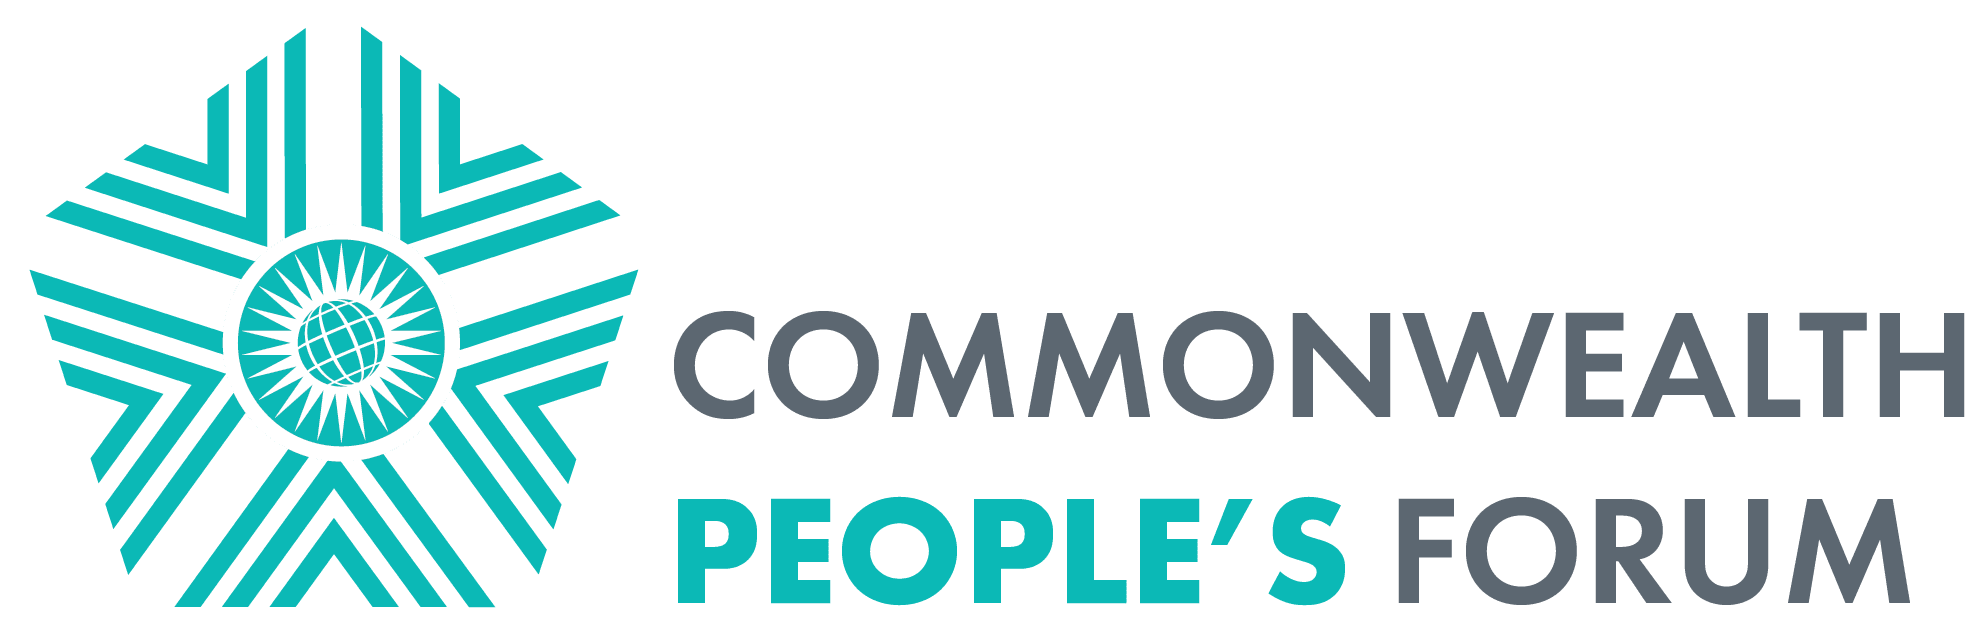 People's Forum - Commonwealth Foundation